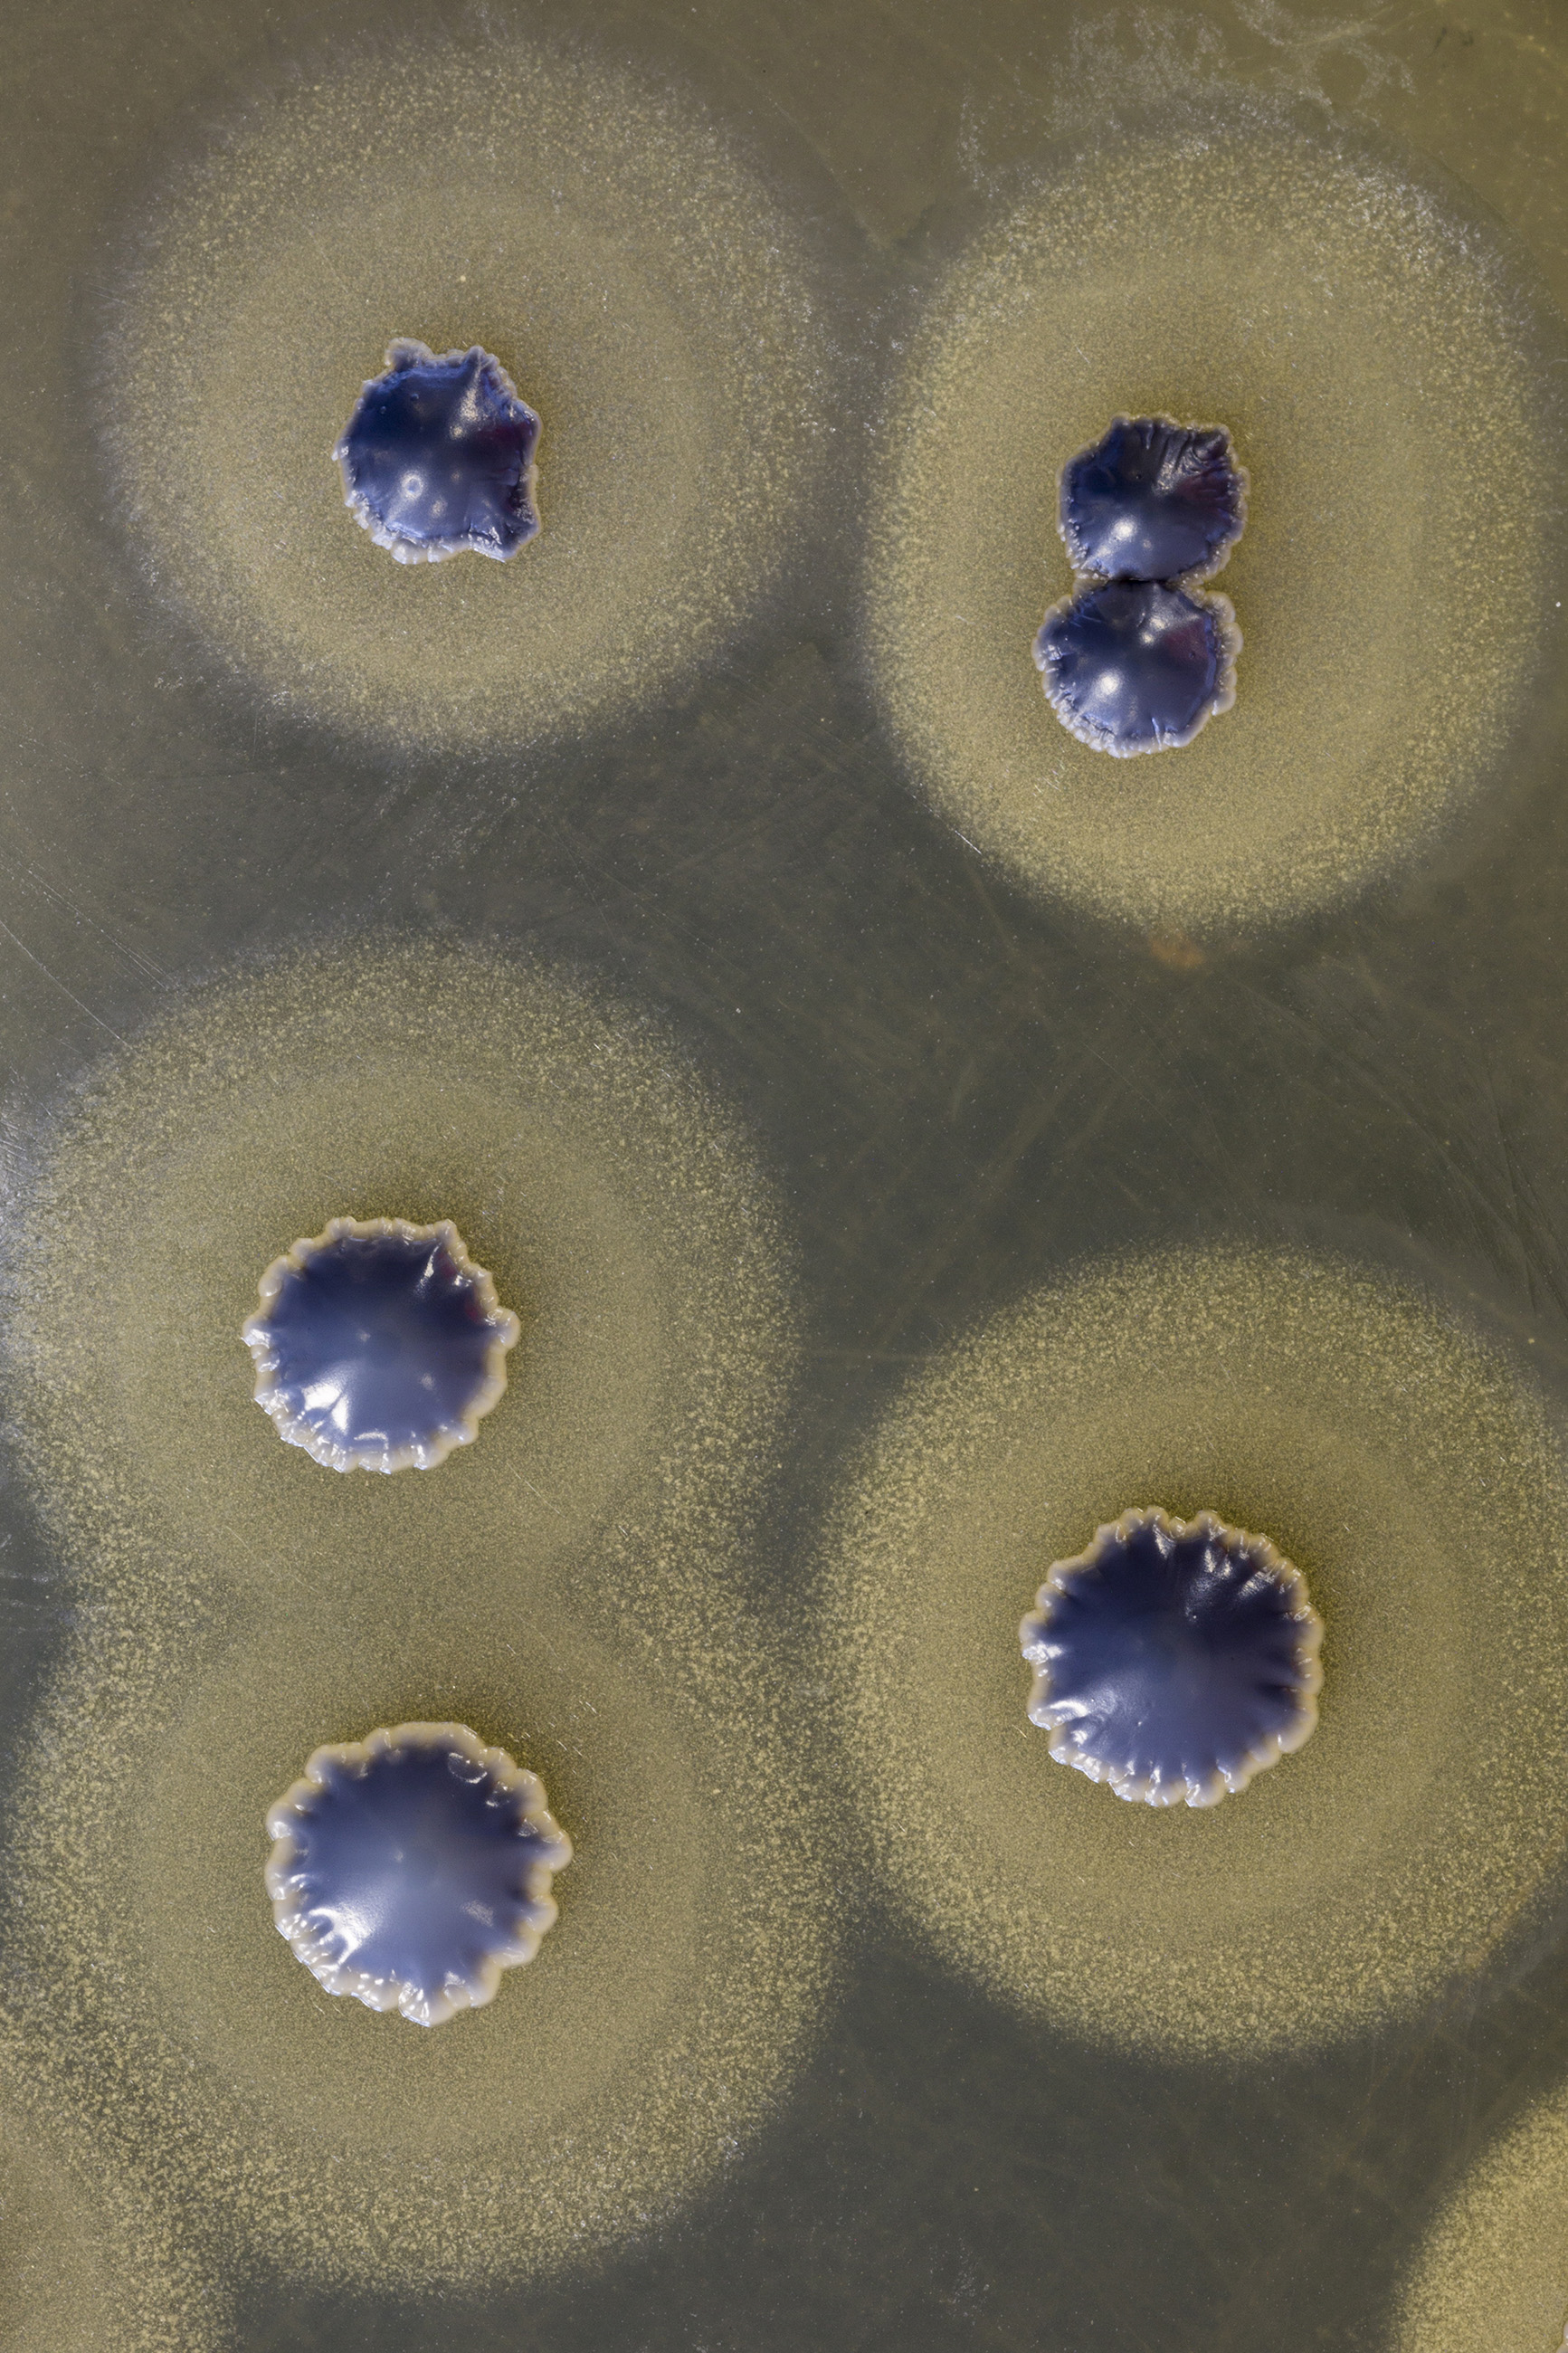 Staphylococcus aureus growing on agar photo